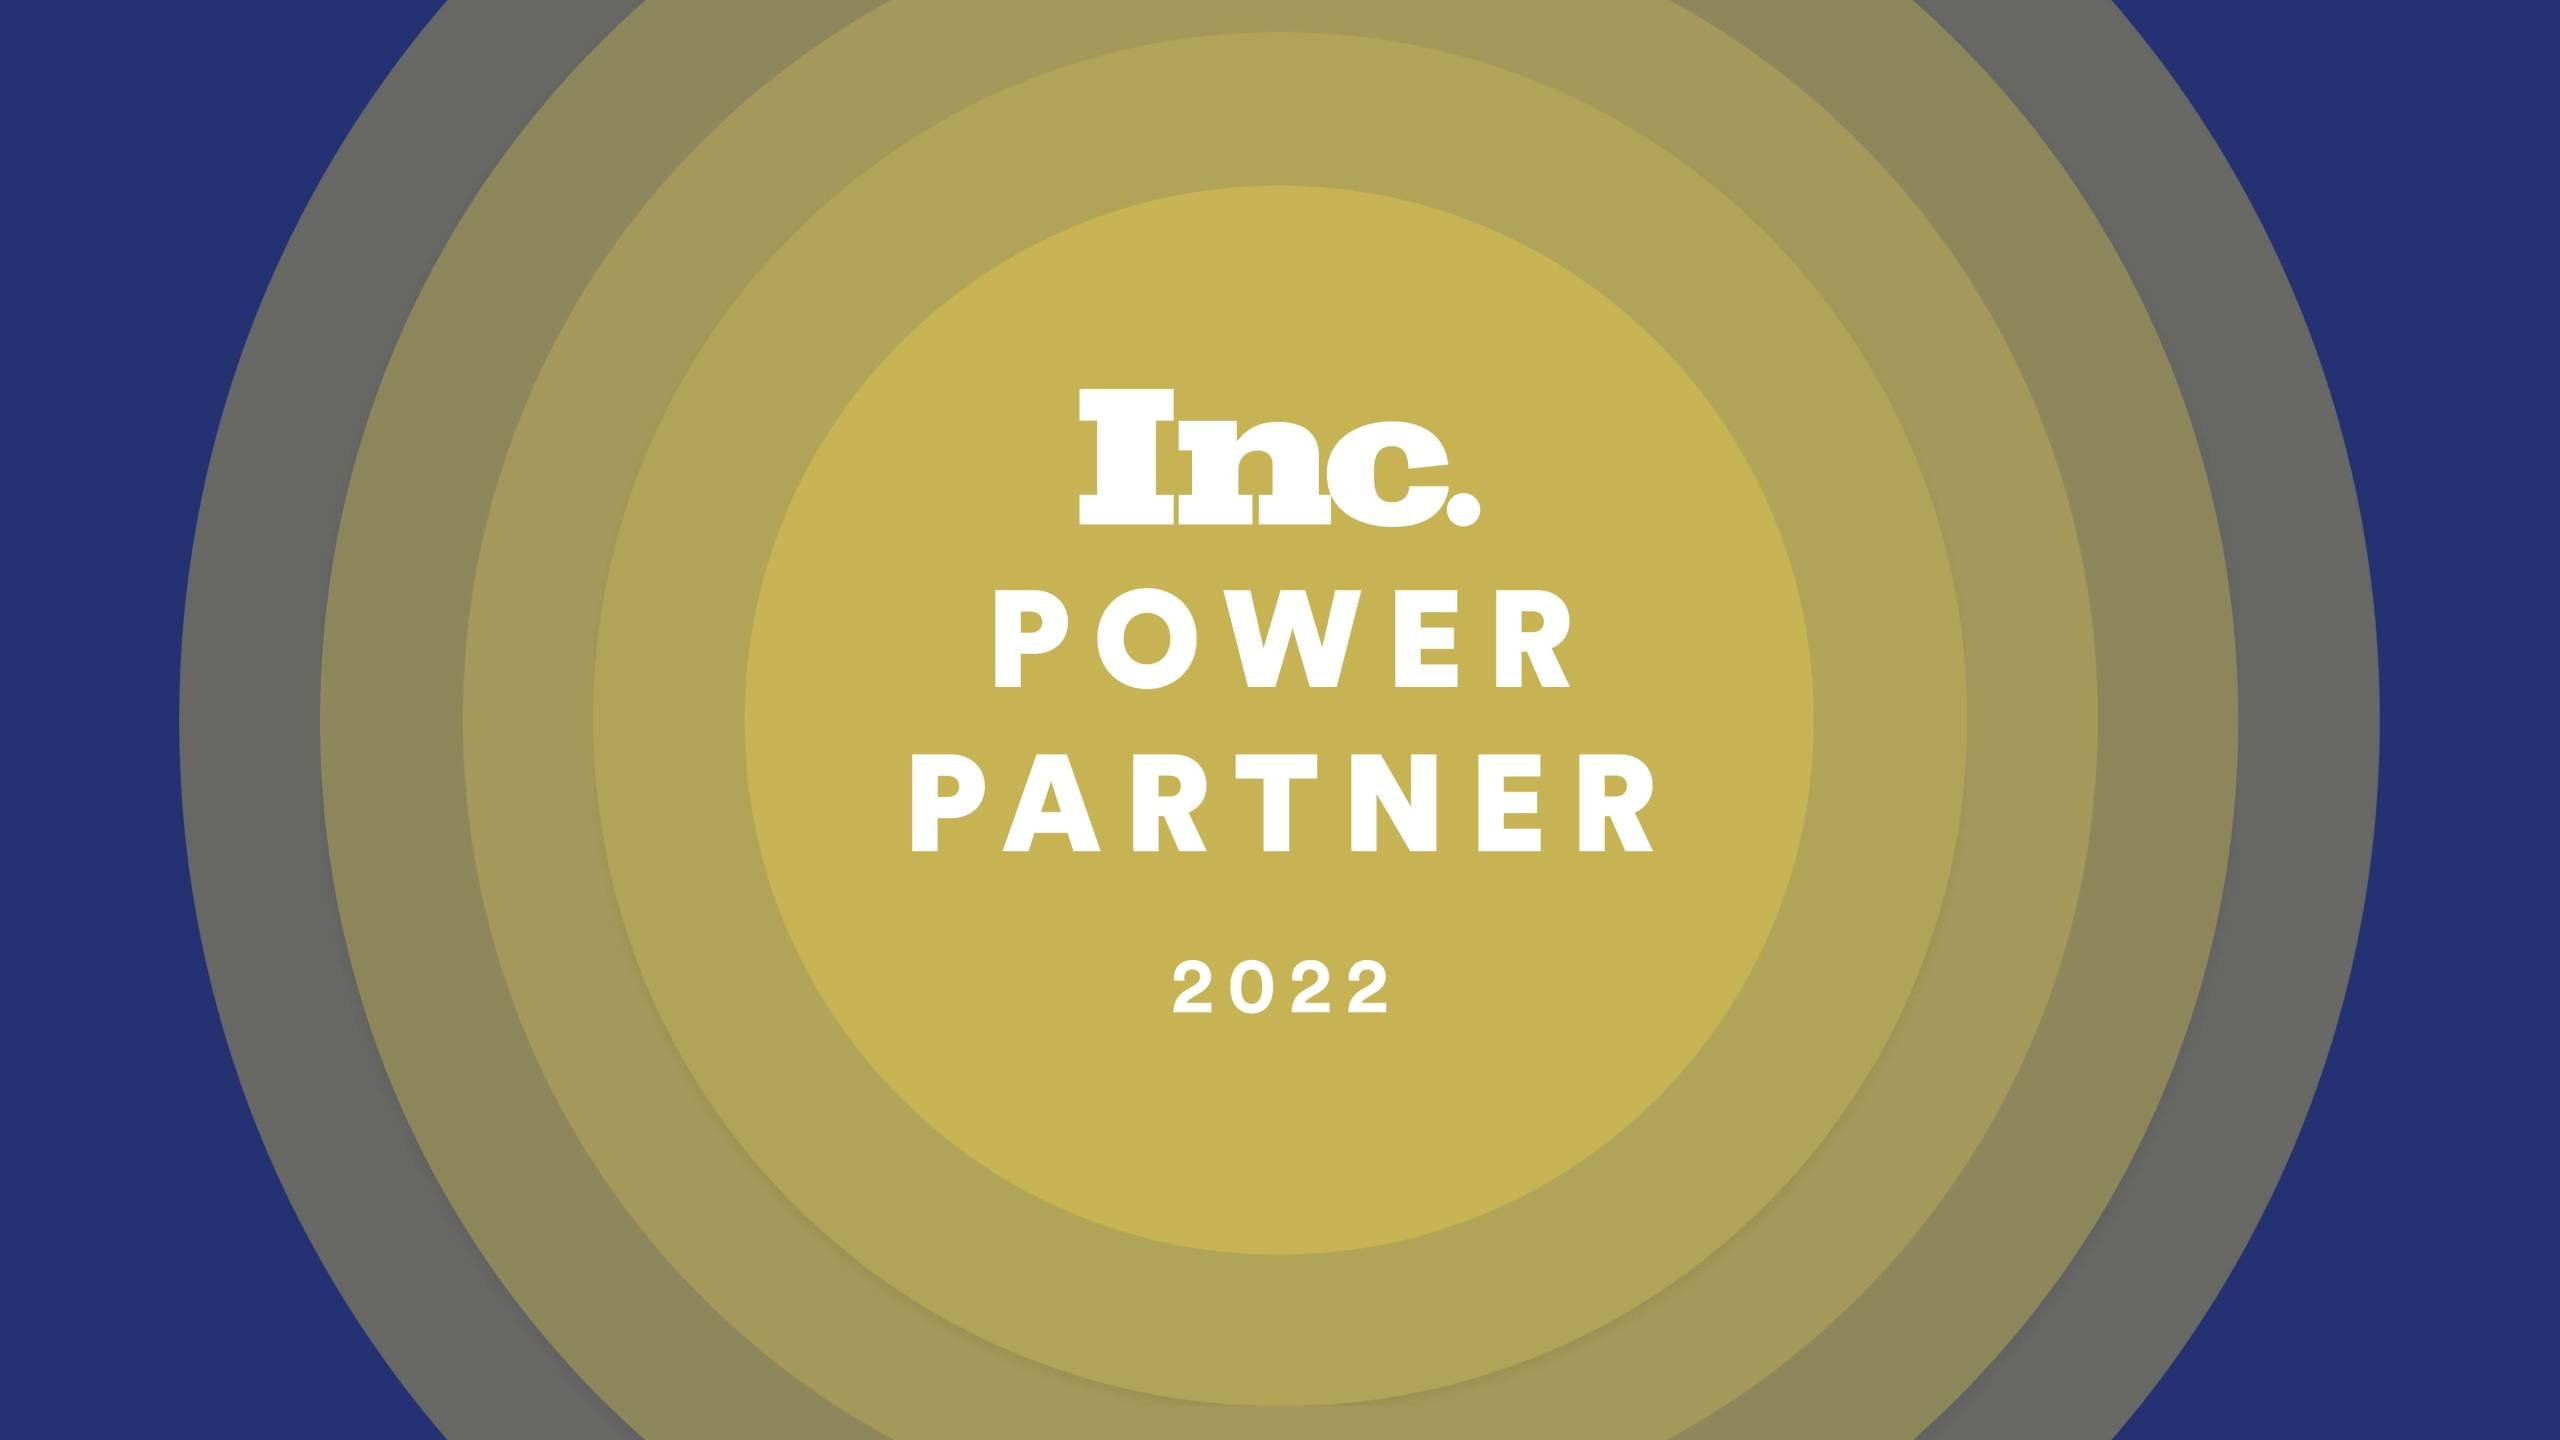 Inc. Power Partner Social Sharing Image - Unity Communications